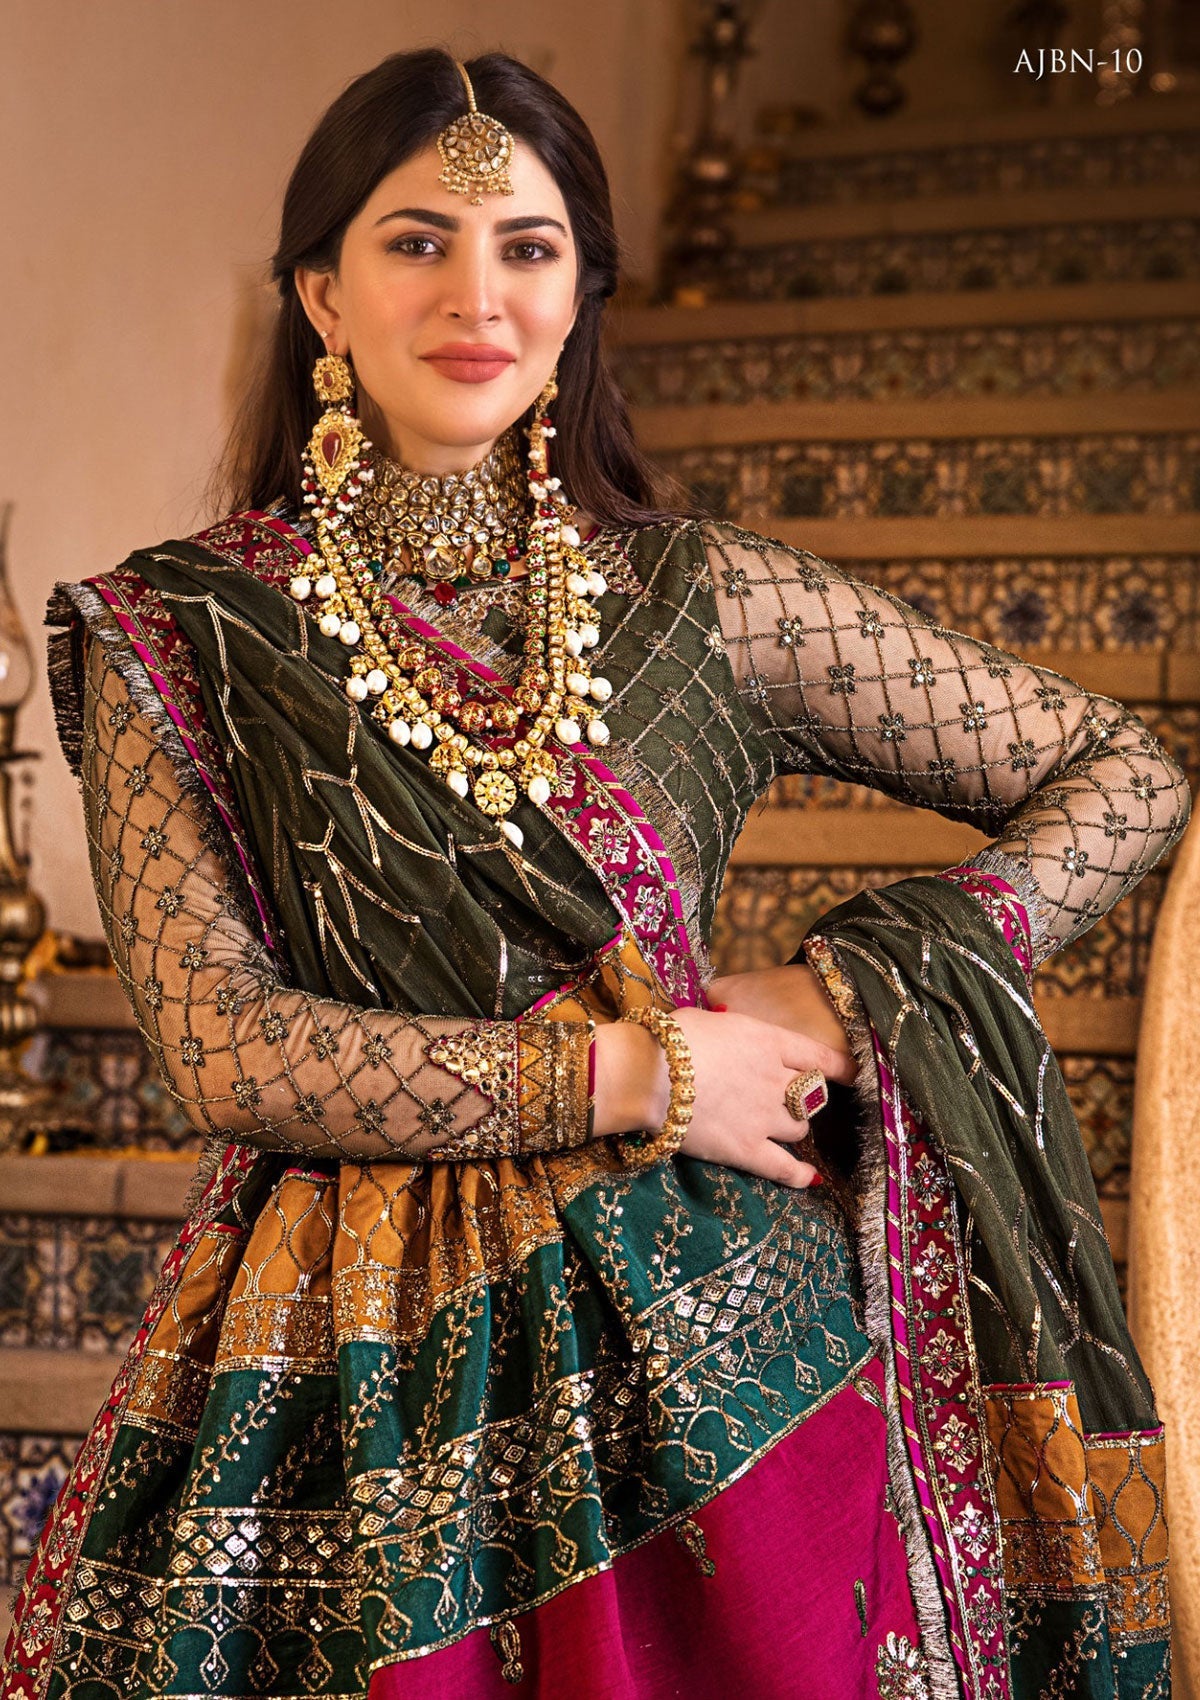 Formal Dress - Asim Jofa - Baad e Naubahar - AJBN#10 available at Saleem Fabrics Traditions